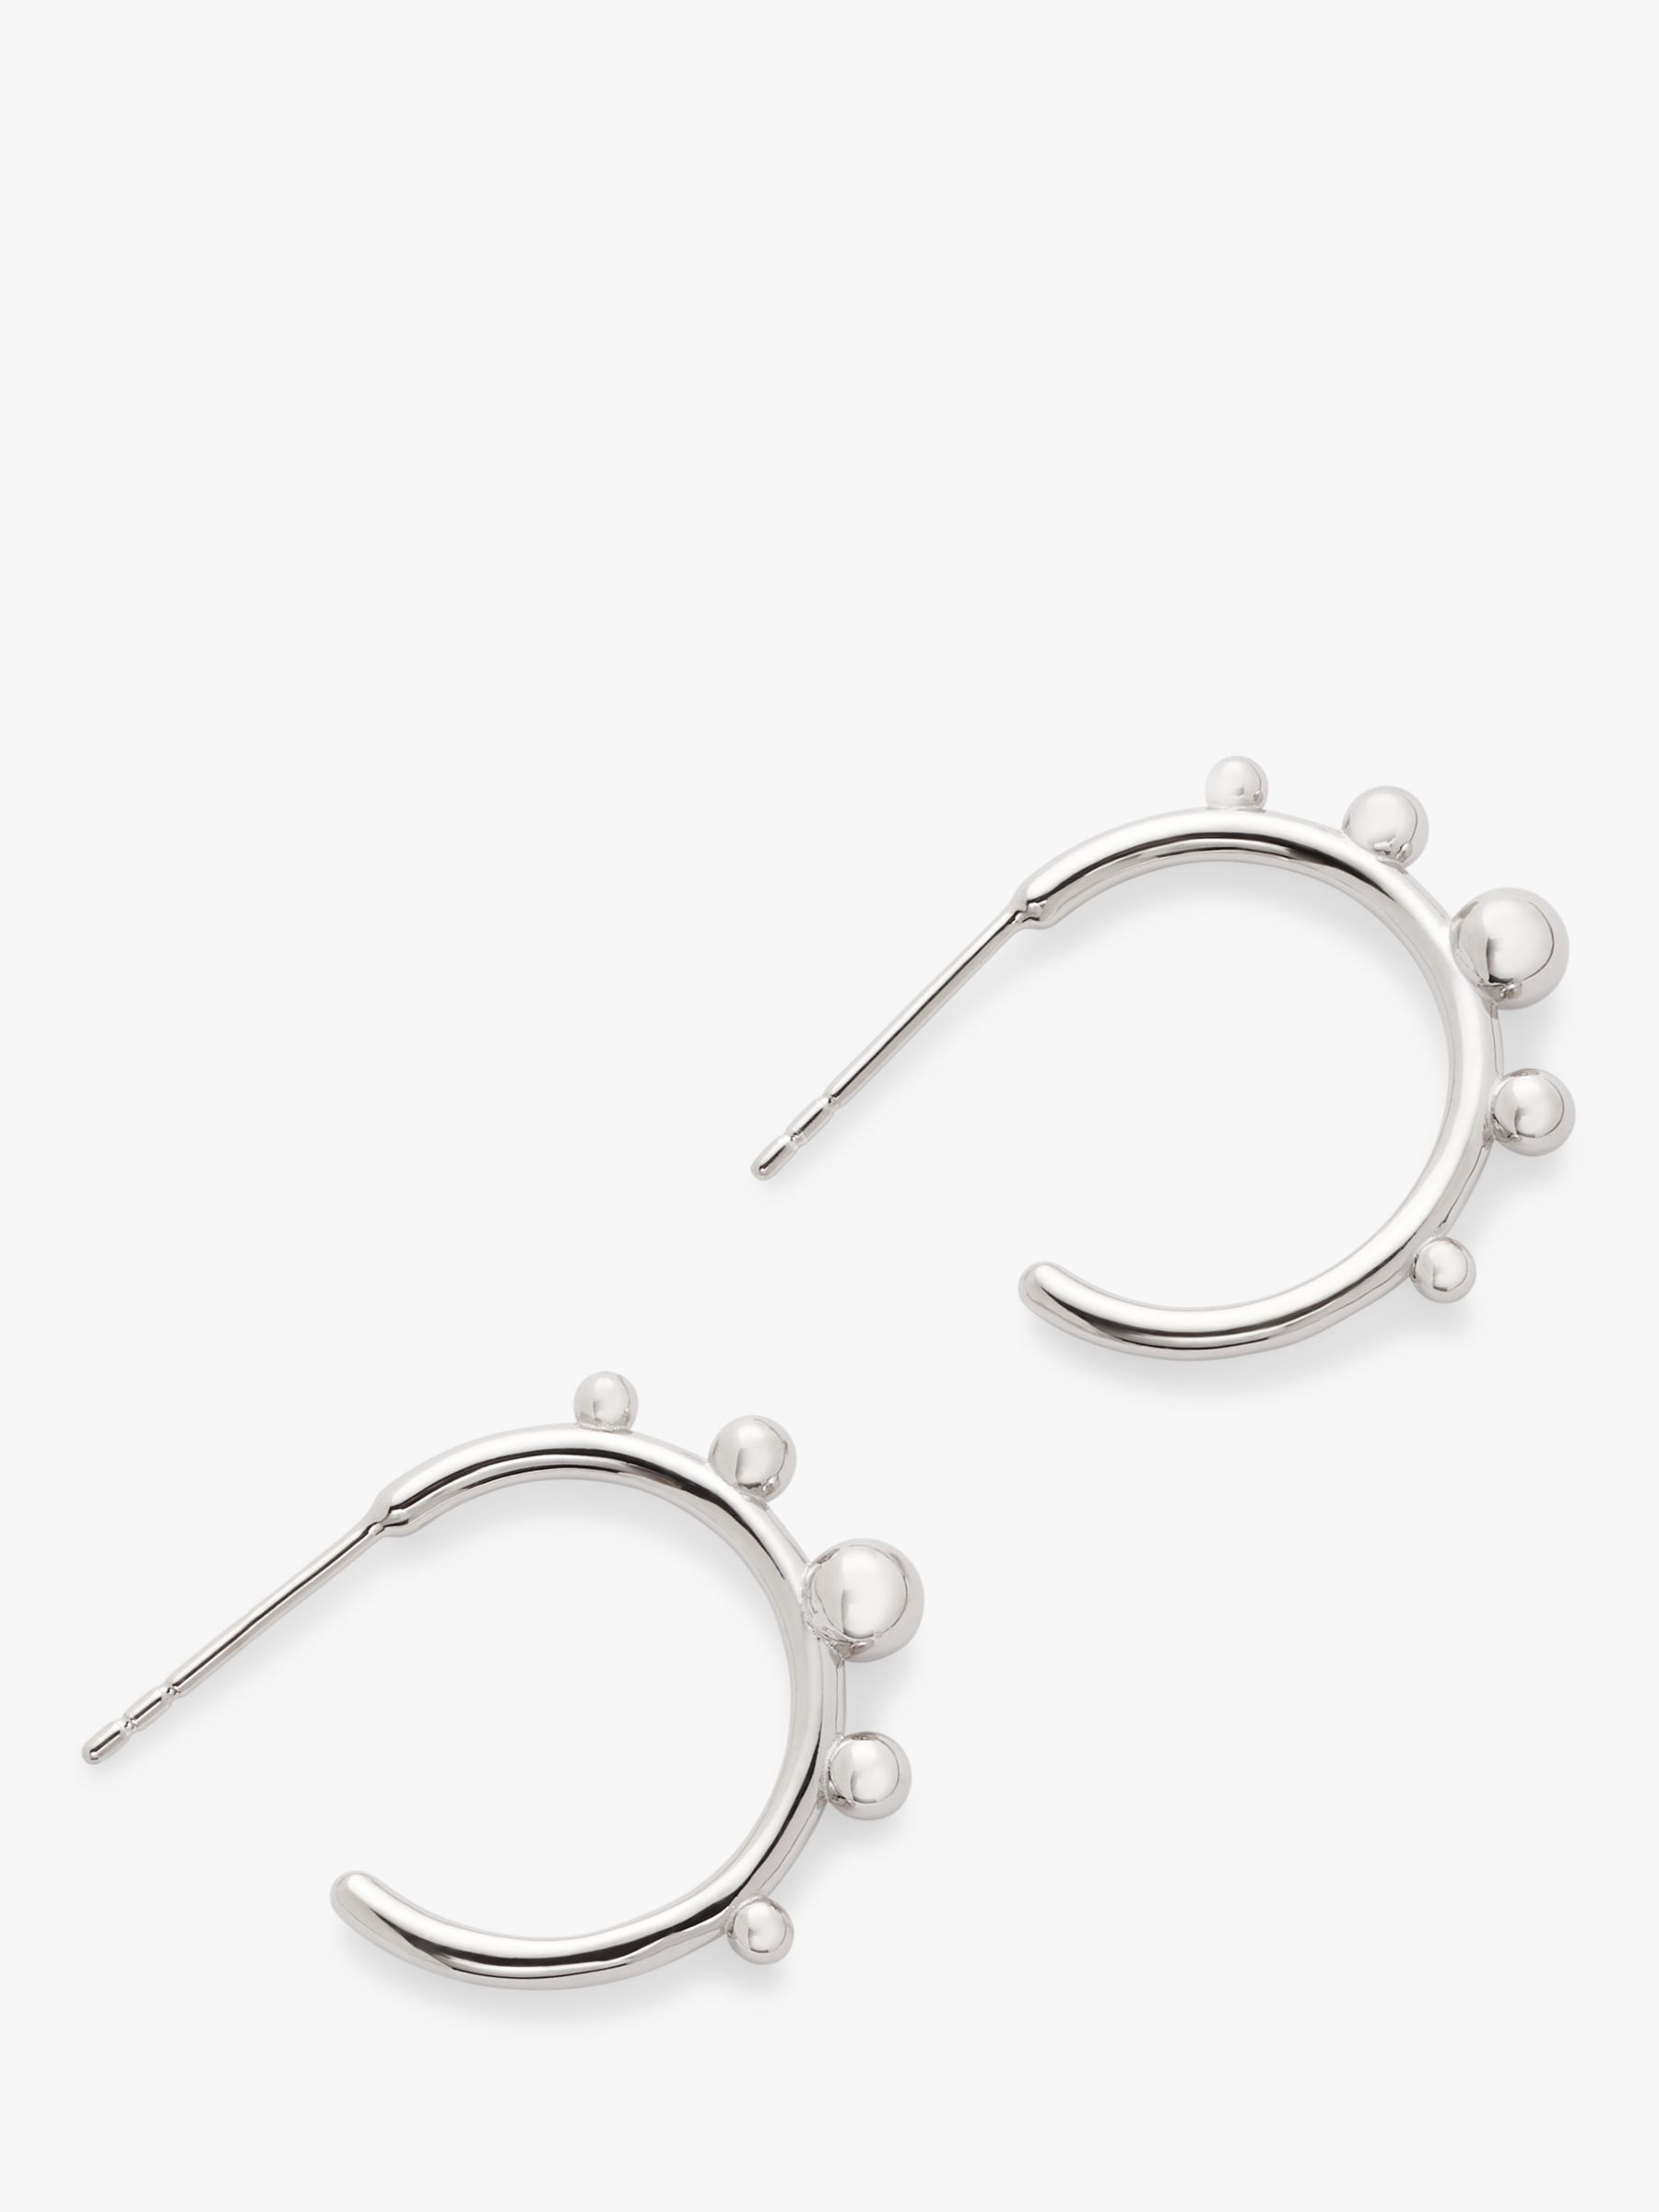 ELLE Lady's White Sterling Silver Medium Double Hoop Earrings